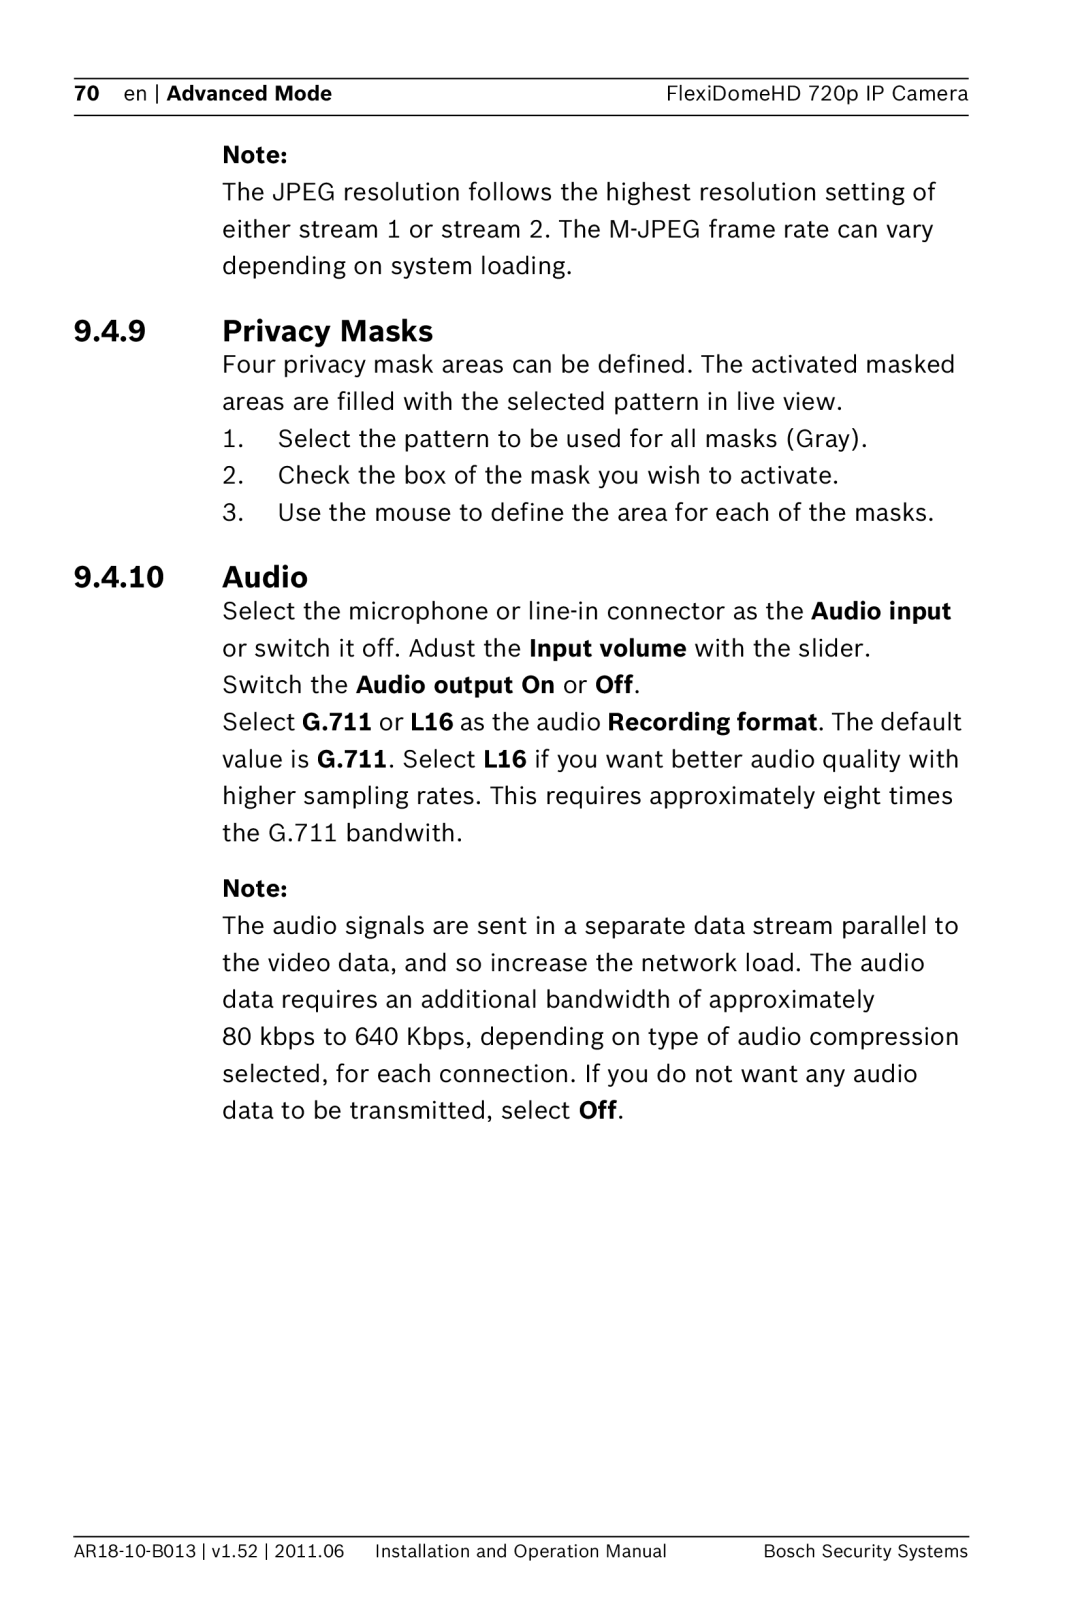 Bosch Appliances NDN-921 operation manual 9.4.9Privacy Masks, 9.4.10Audio 